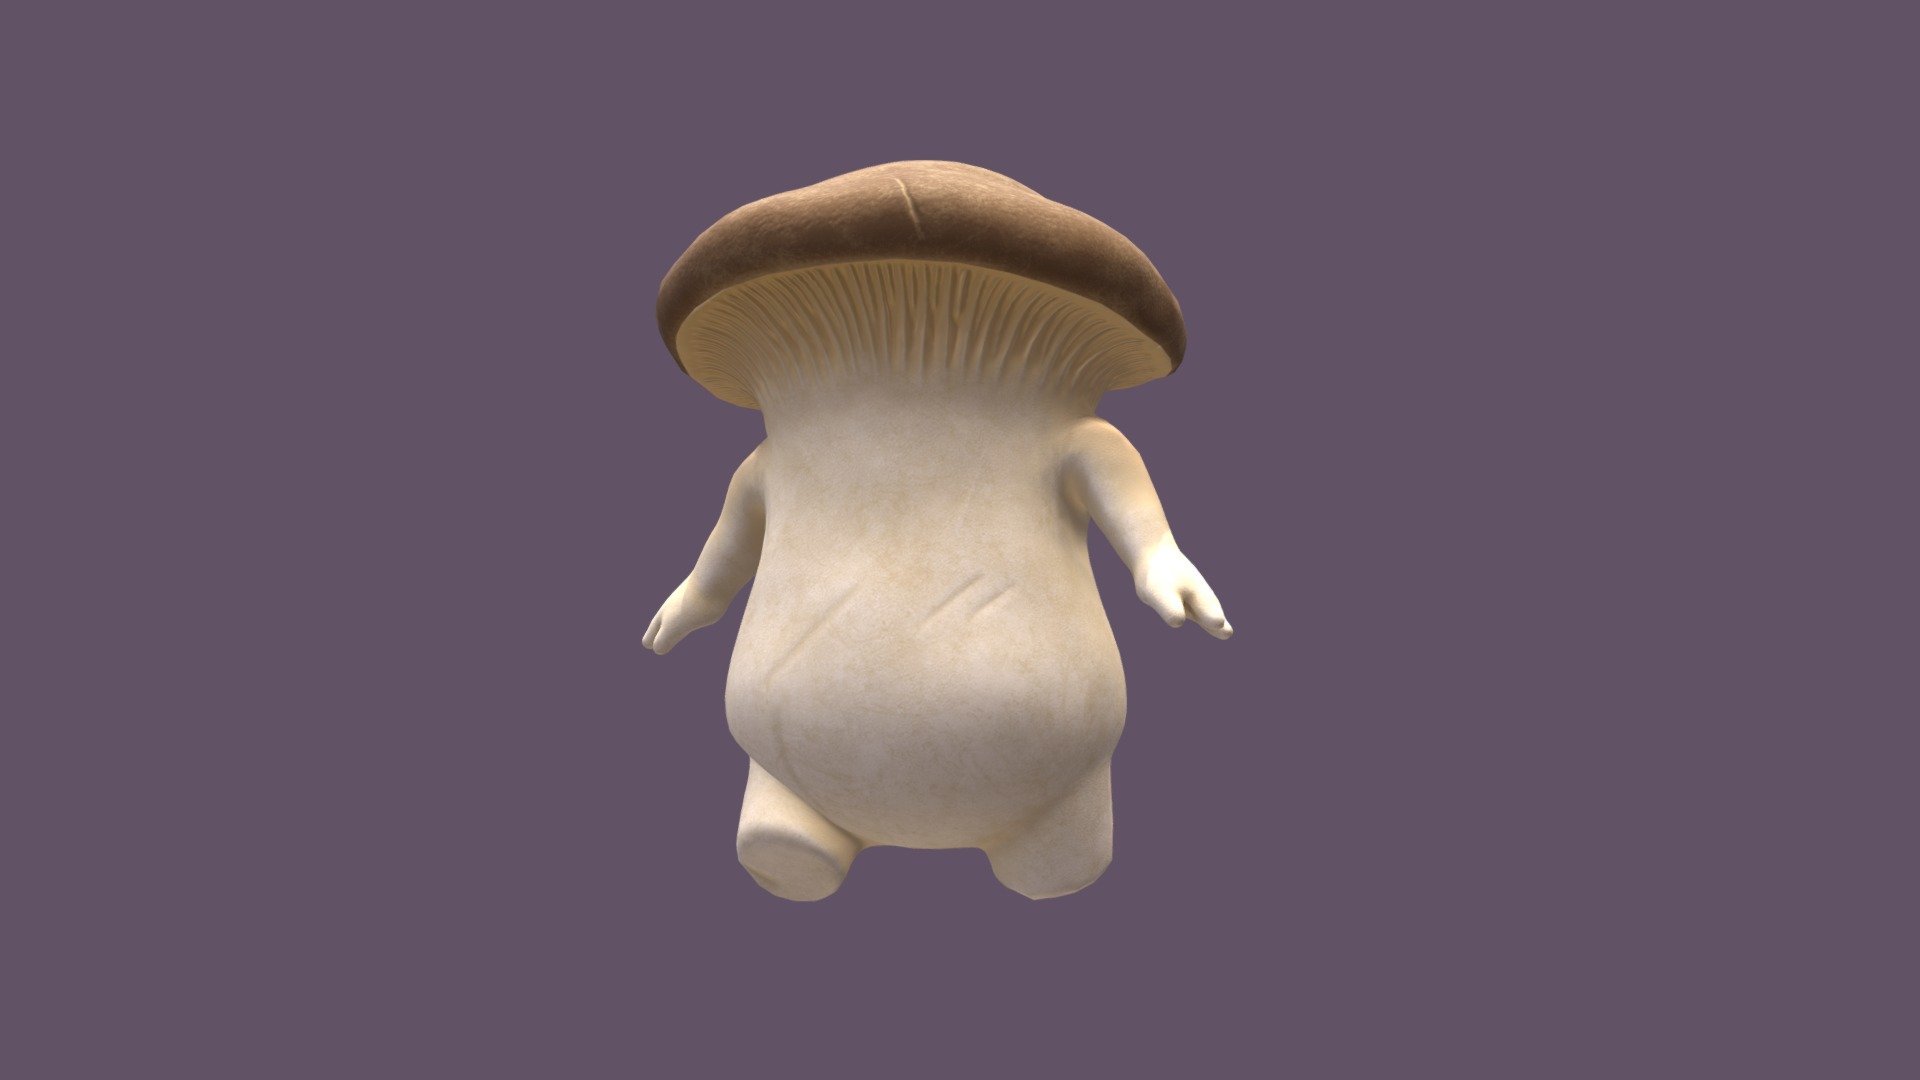 chubby mushroom character resemblant of the mushroom enemies from Dark Souls 3d model